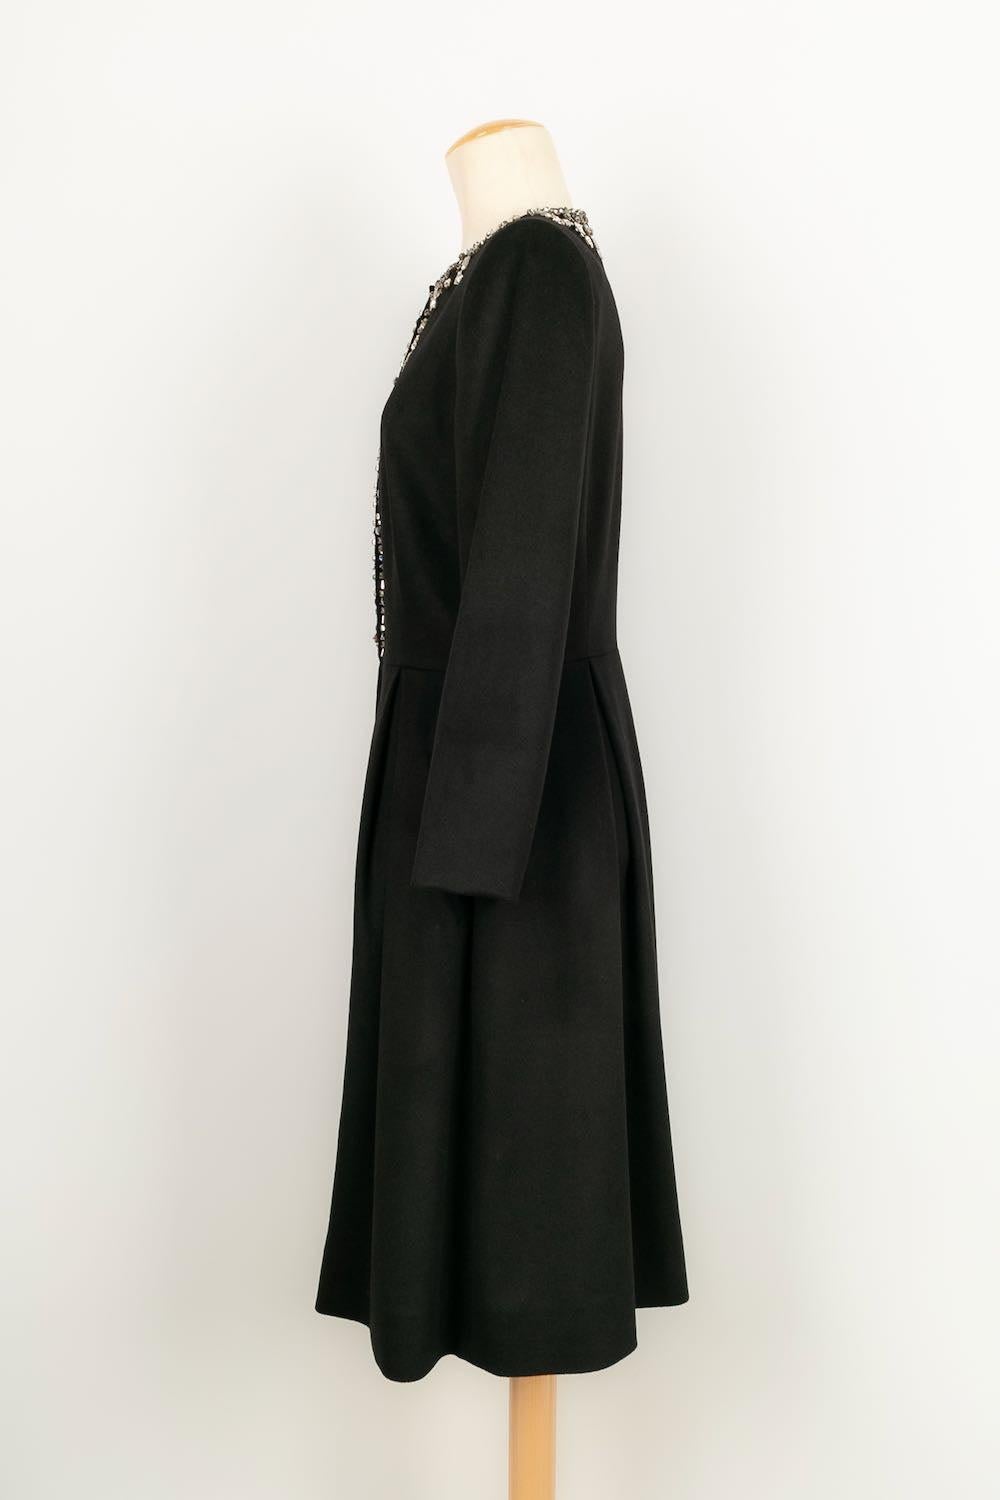 Azzaro Lange schwarze Kaschmirjacke, Größe 40FR Damen im Angebot